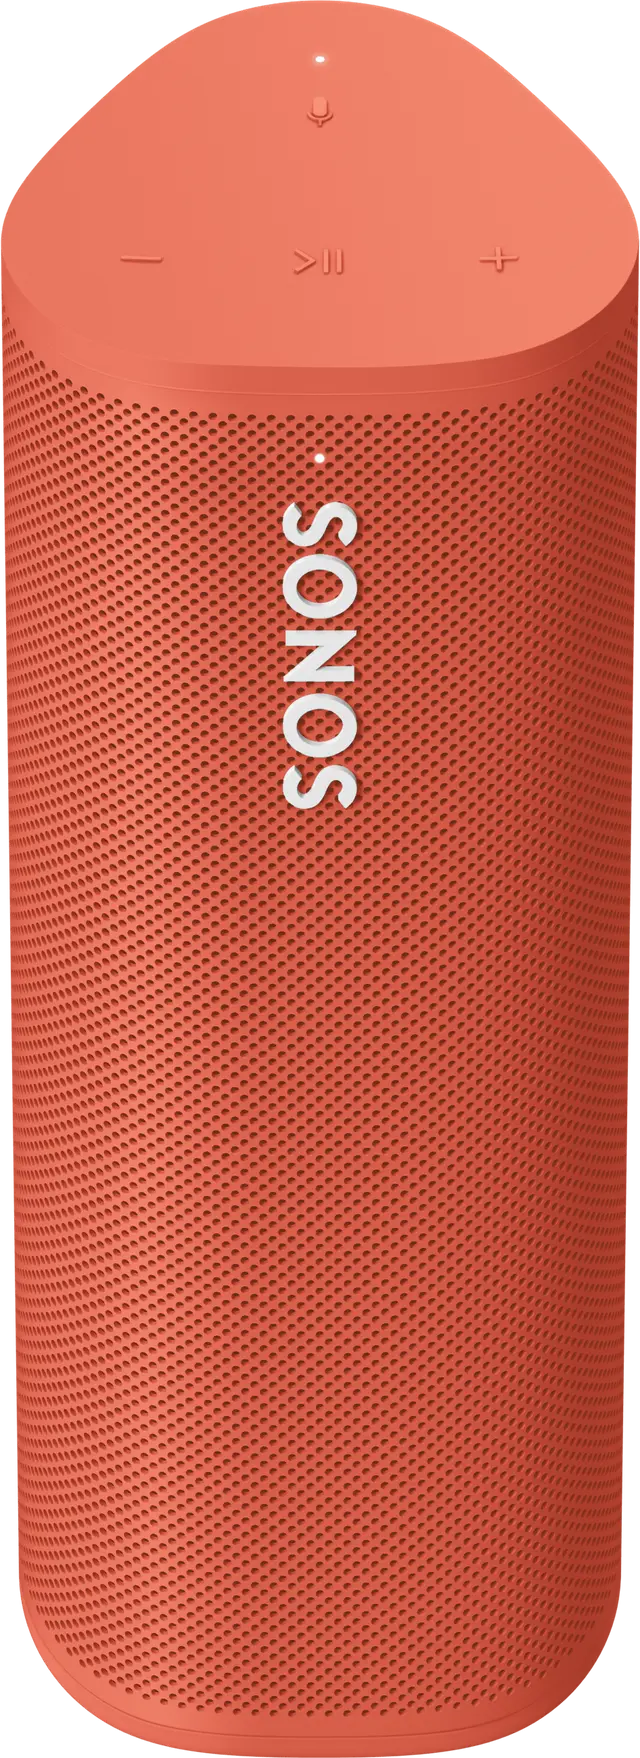 Sonos Roam Wireless Charger